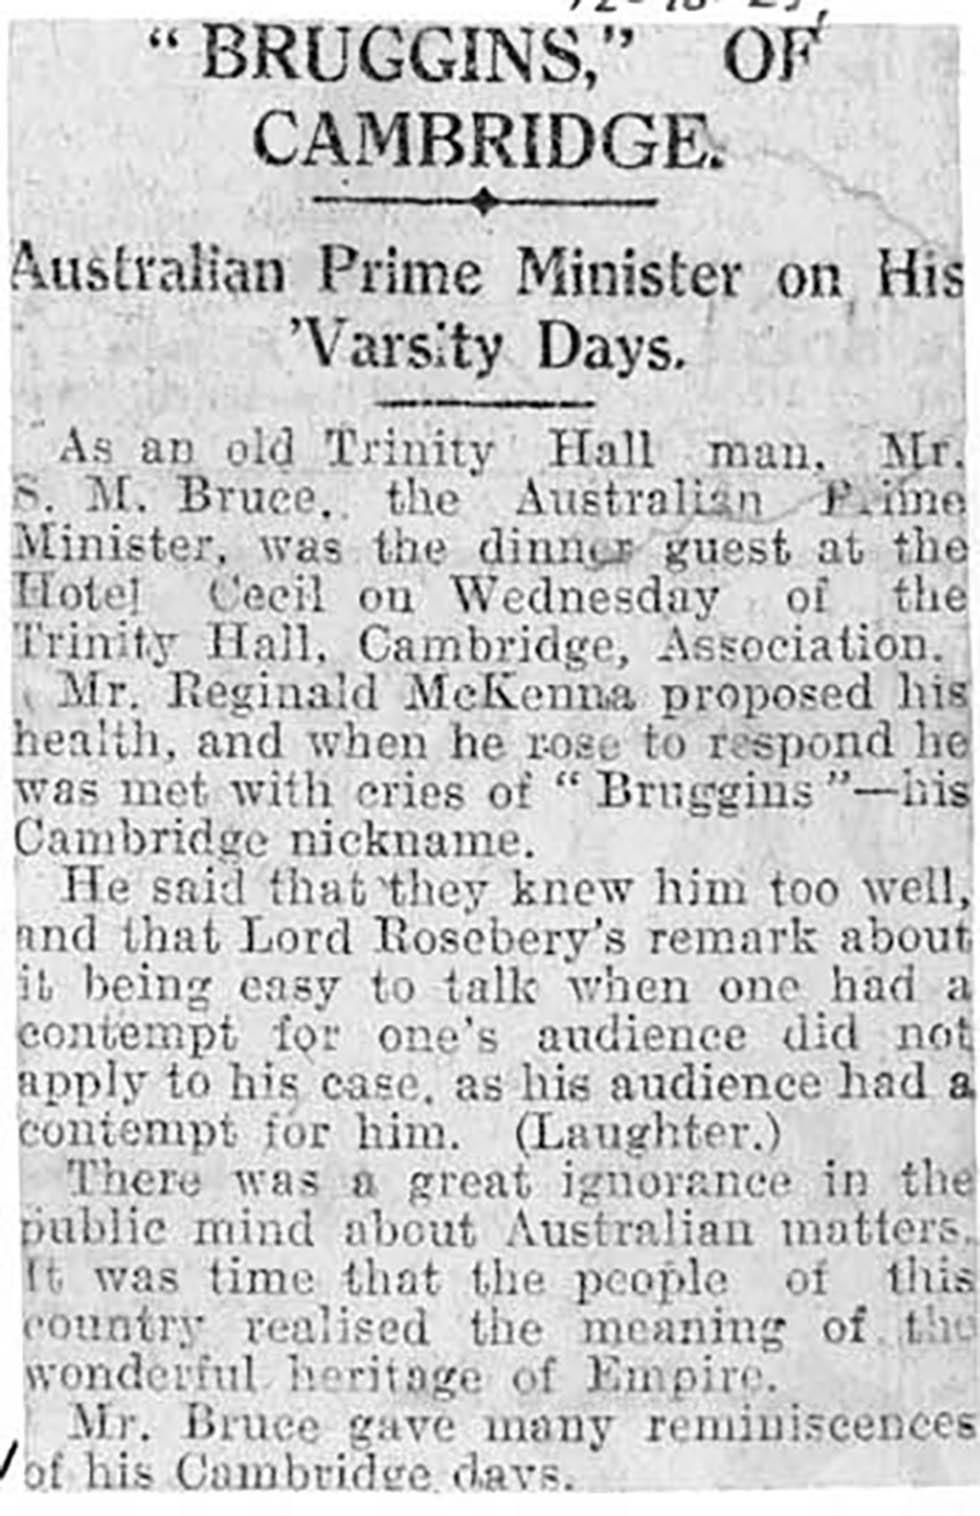 Newspaper article titled '"Bruggins" of Cambridge." Subtitled "Australian Prime Minister on His Varsity Days."